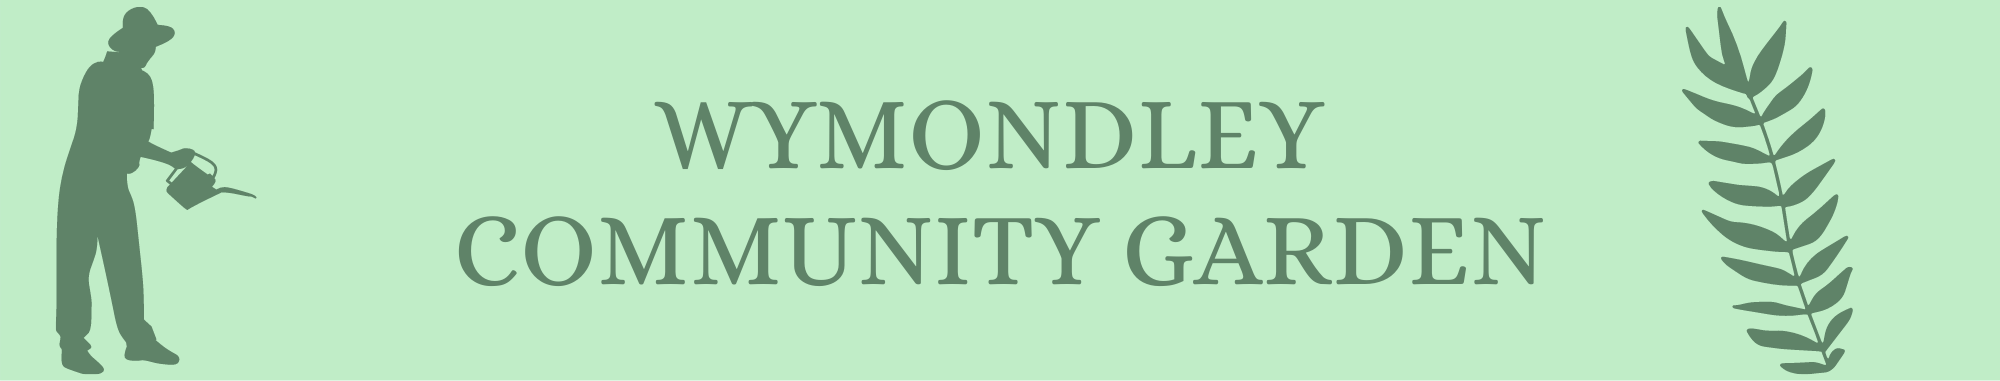 Wymondley Community Garden